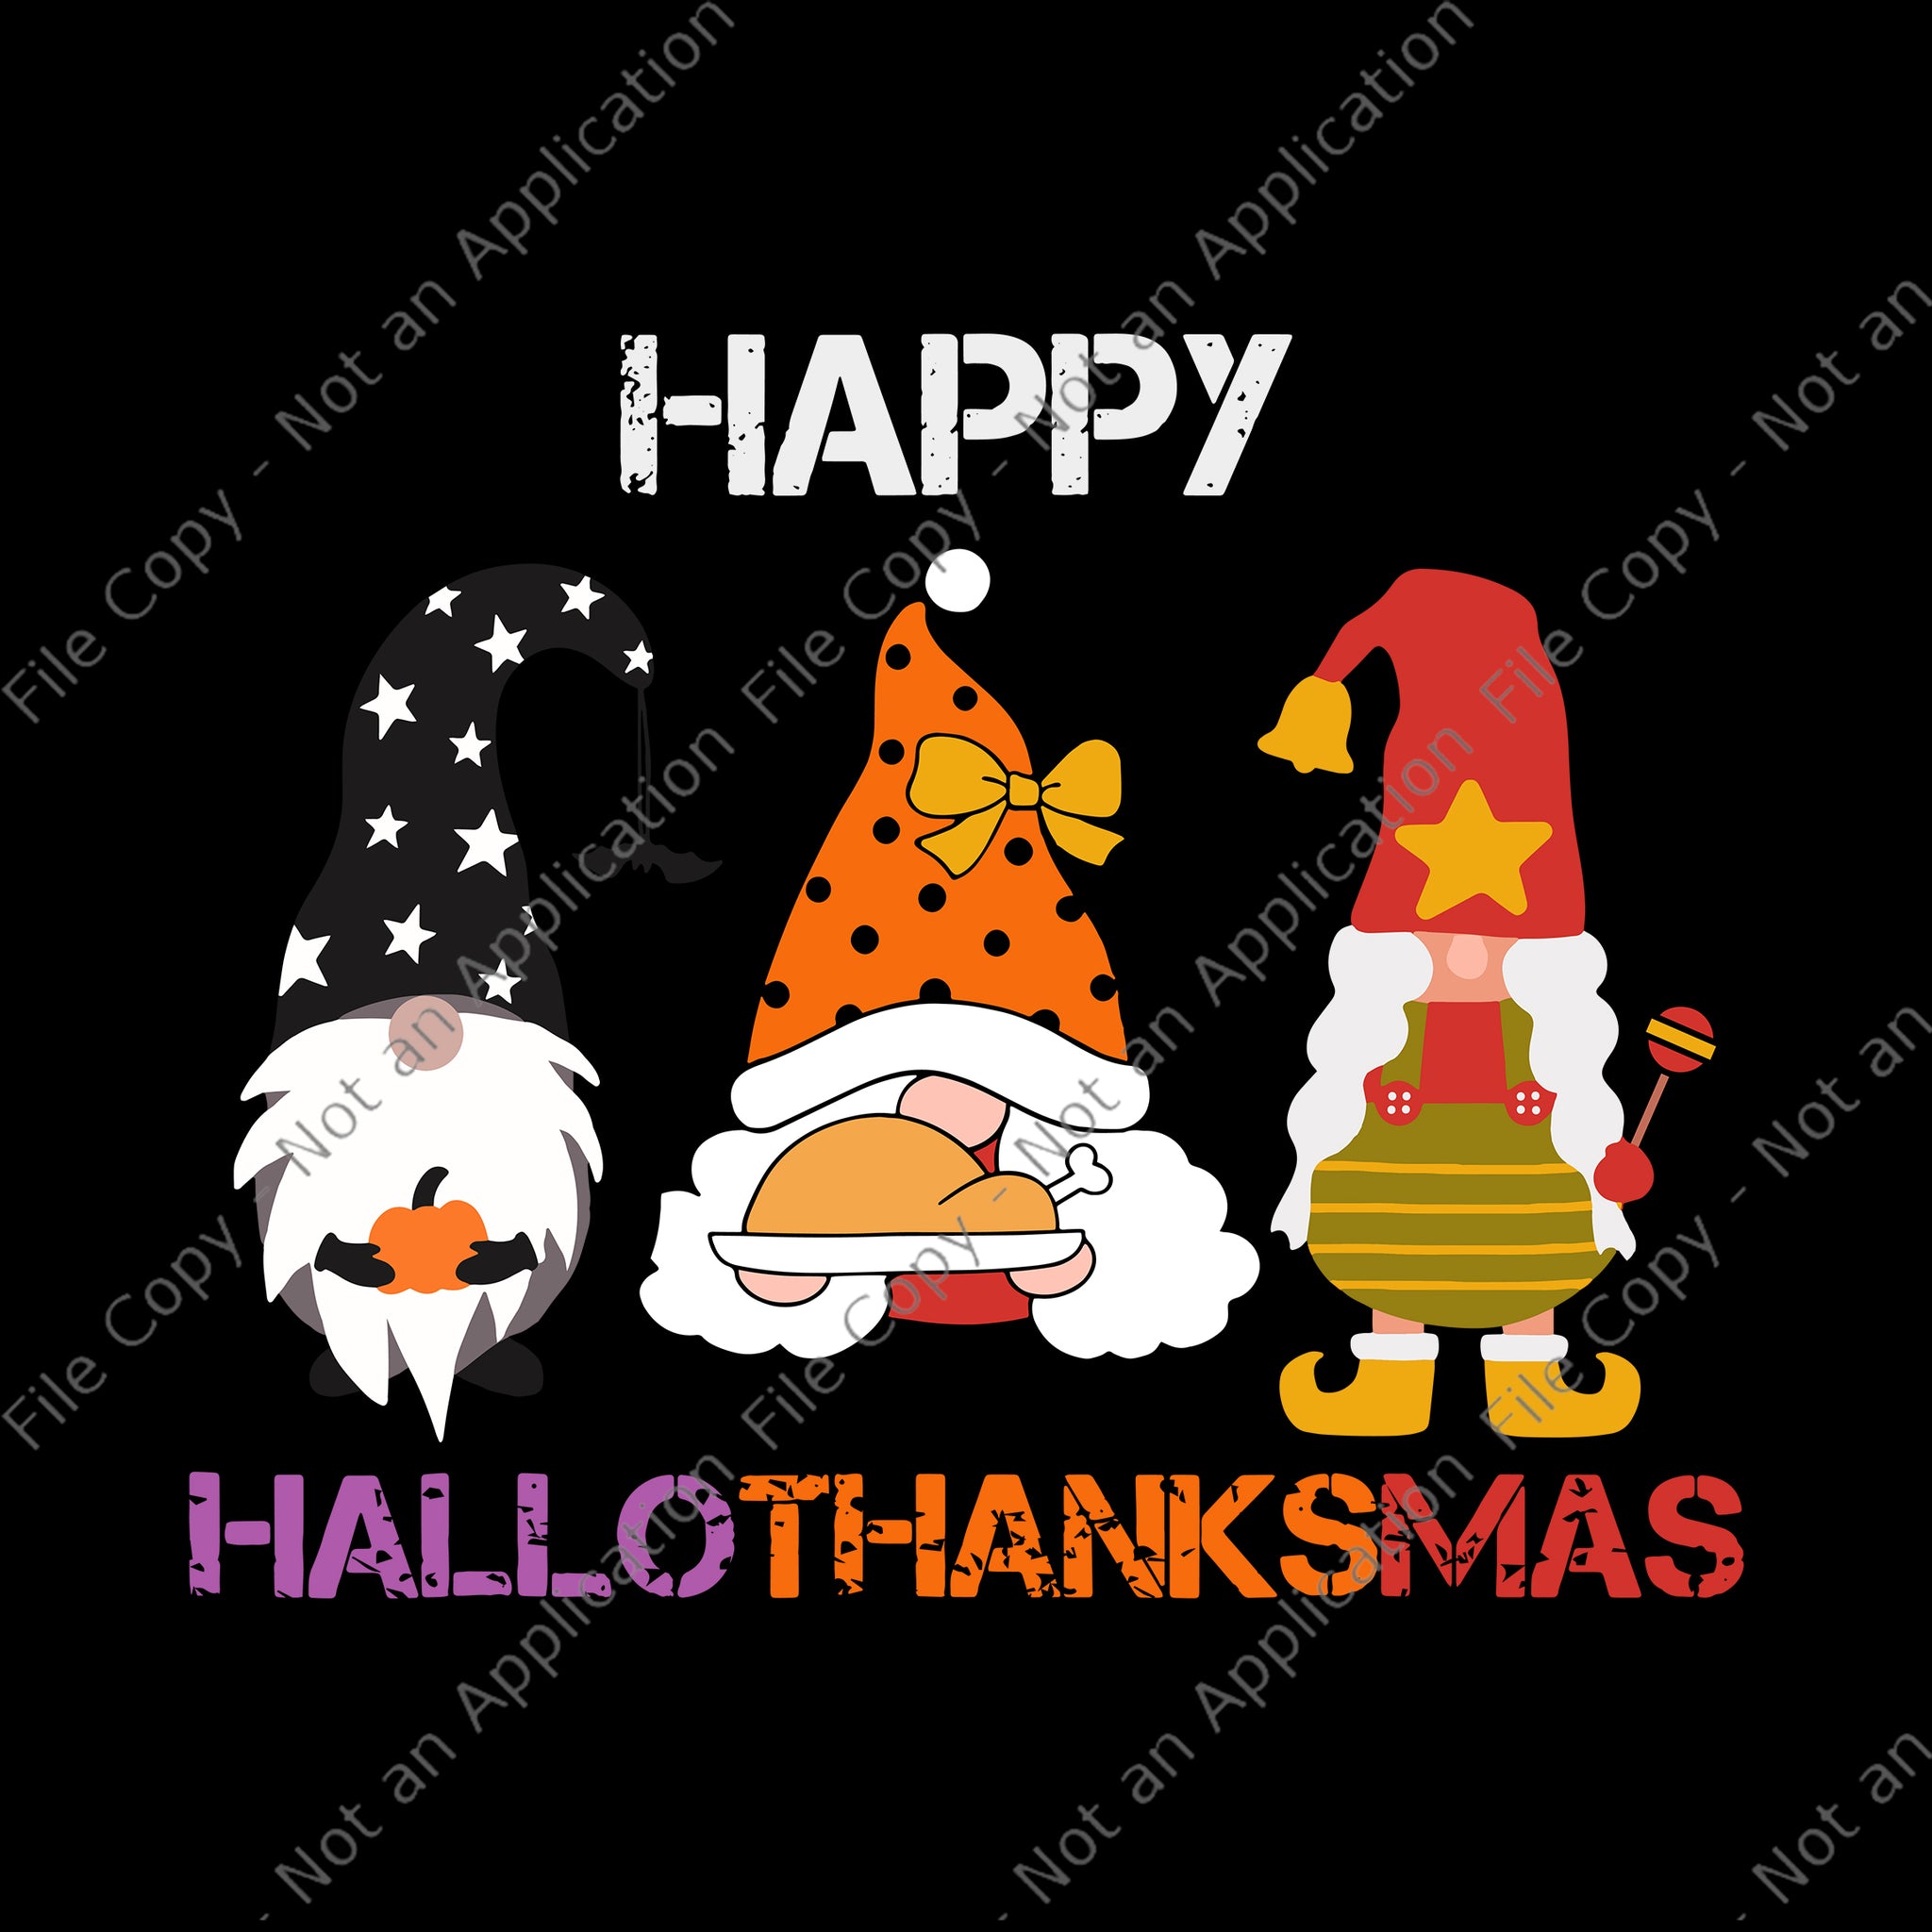 Gnomes Thanksgiving Svg, Christmas Happy HalloThanksMas Gnomes Svg, Thanksgiving Svg, Thanksgiving Day 2021 Svg